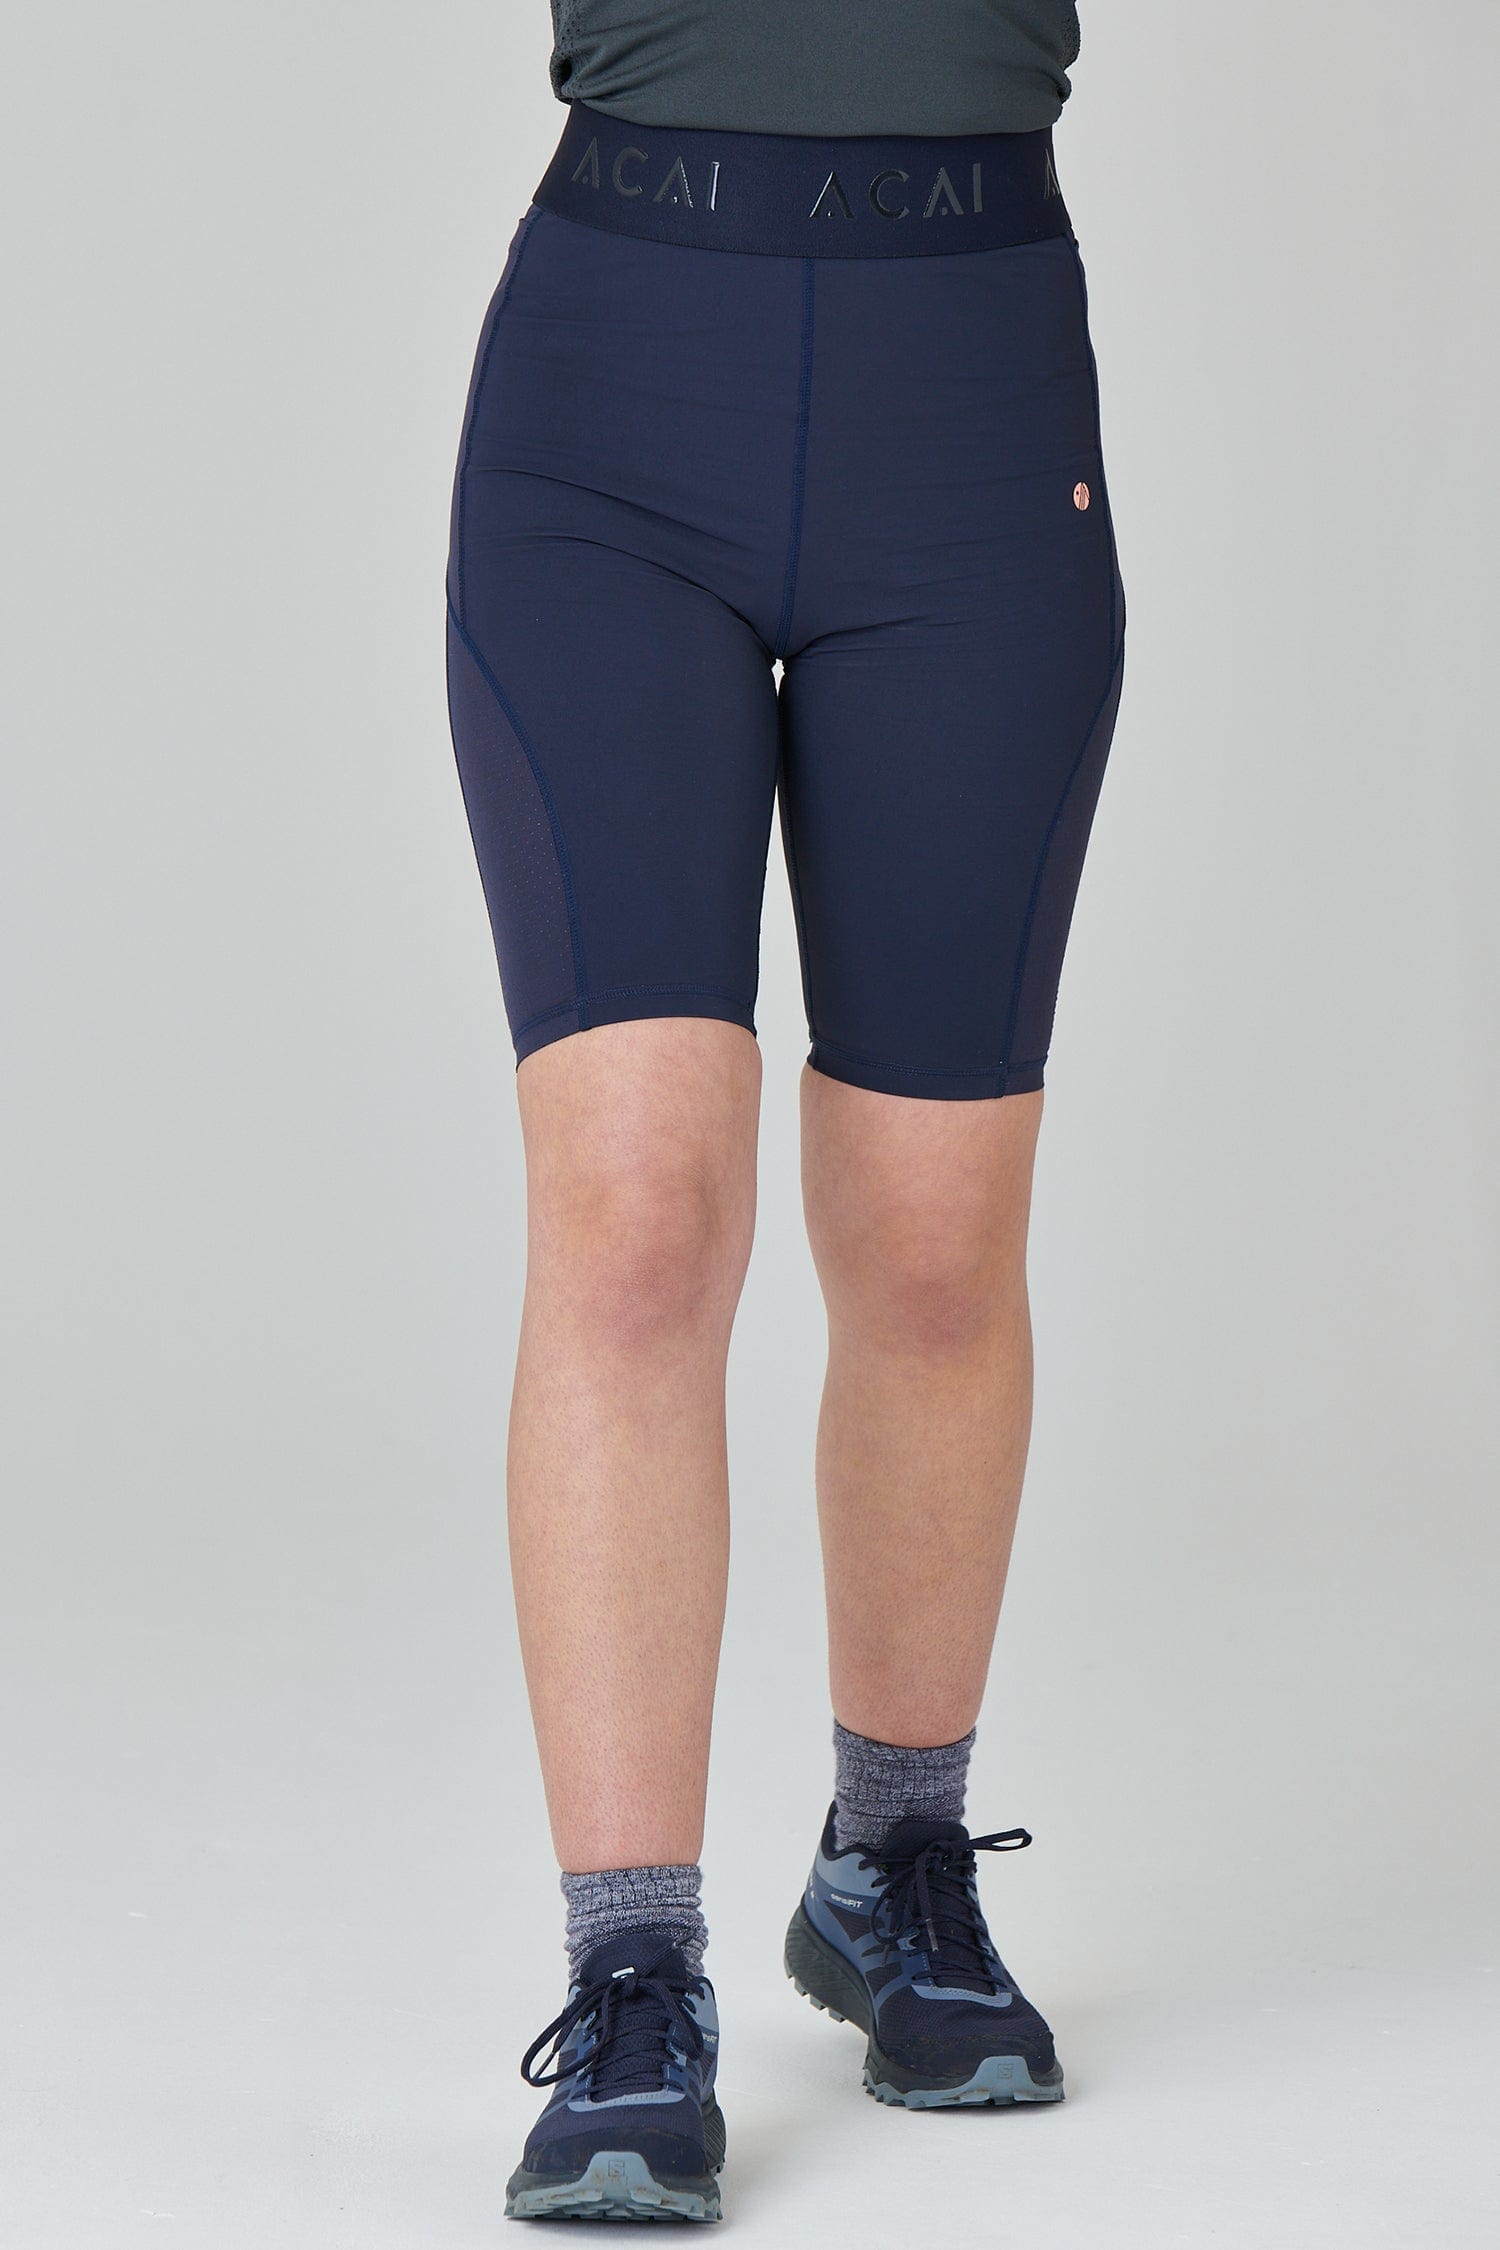 The Panelled Shorts- Midnight Blue - Xsmall / Uk8 - Womens - Acai Outdoorwear